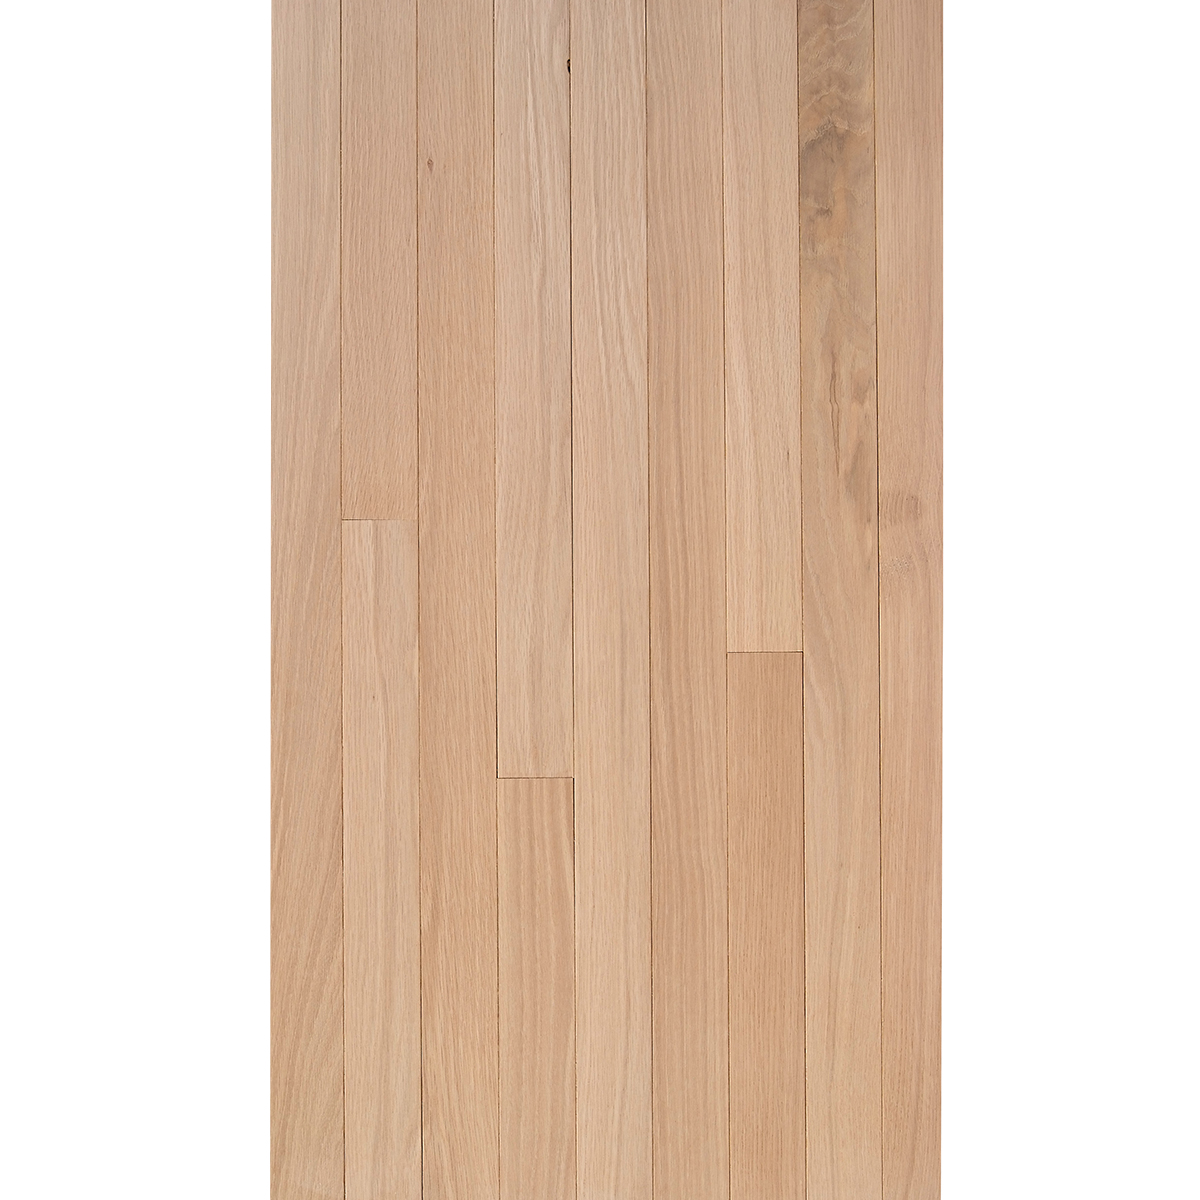 White Oak 3 4 X 2 1 Select Grade, 2 Inch Oak Hardwood Flooring Unfinished